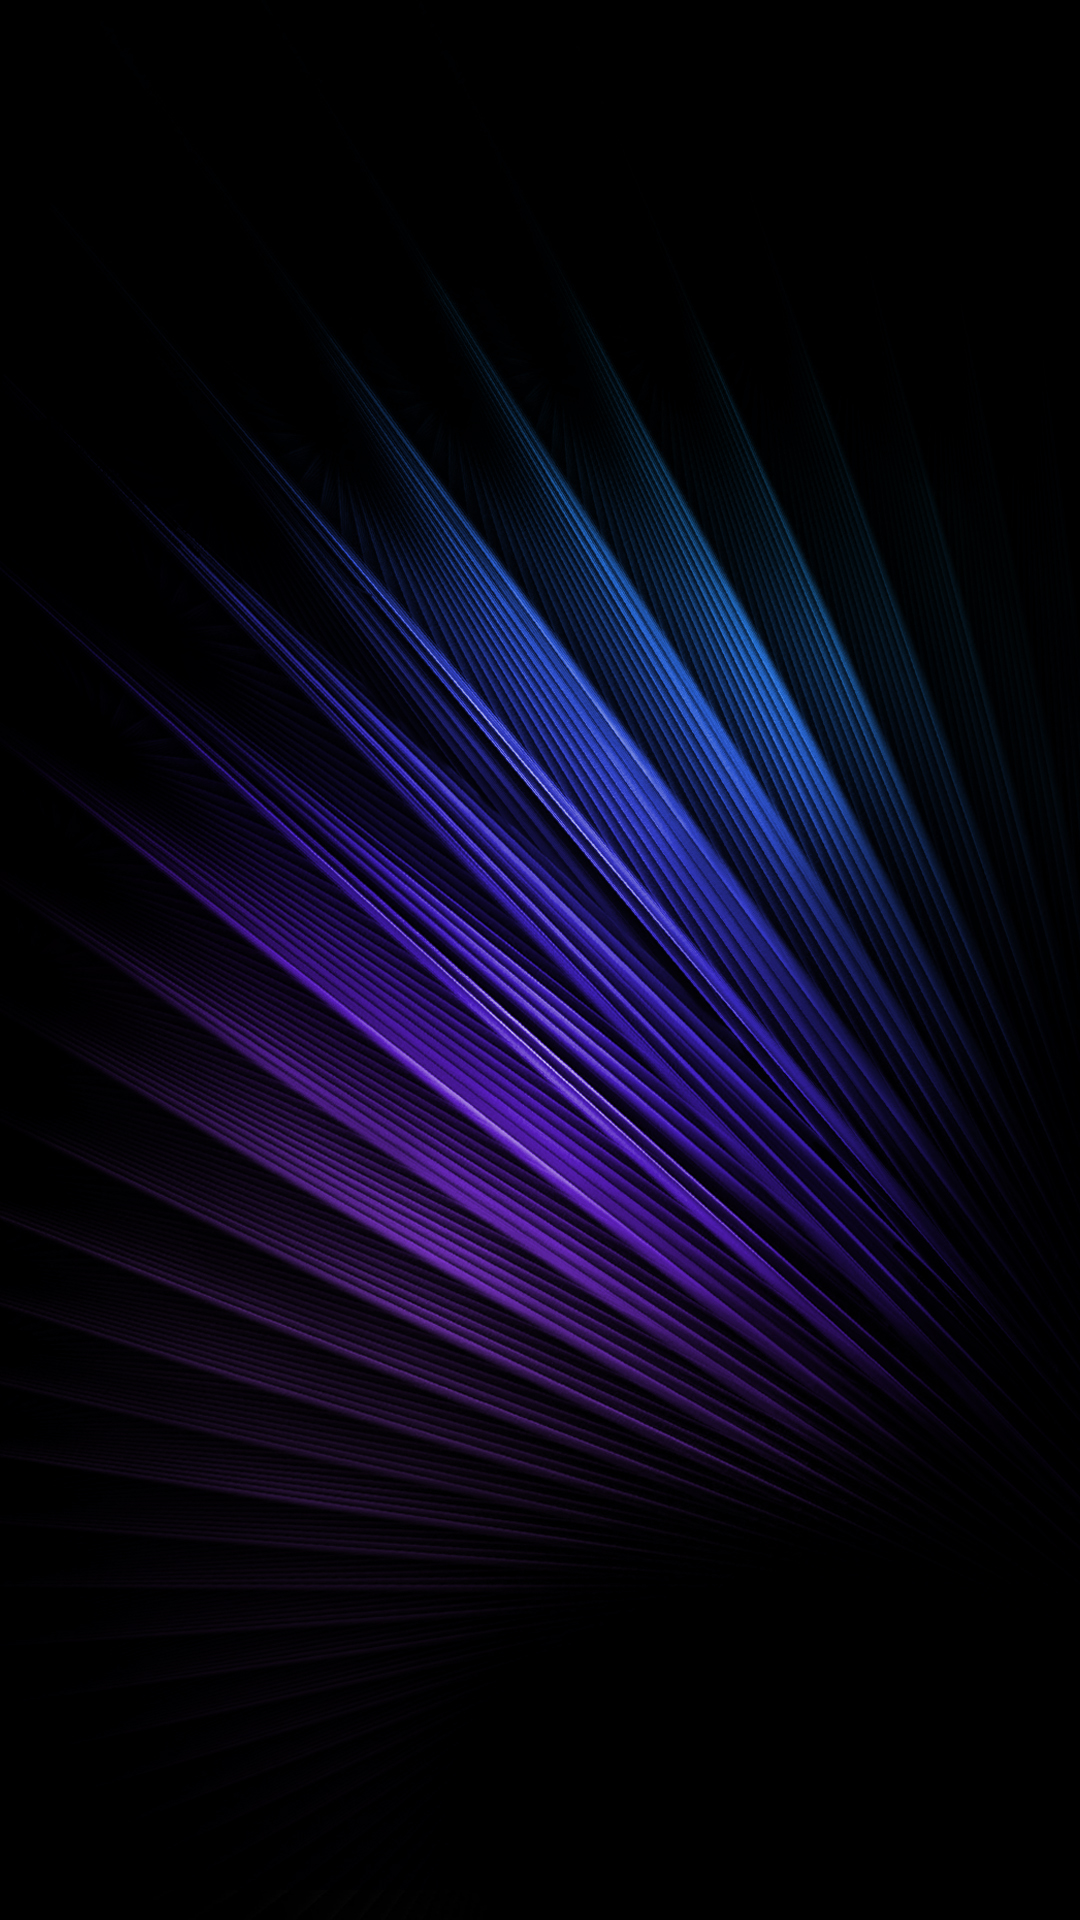 optical illusion iphone wallpaper,blue,black,violet,purple,electric blue